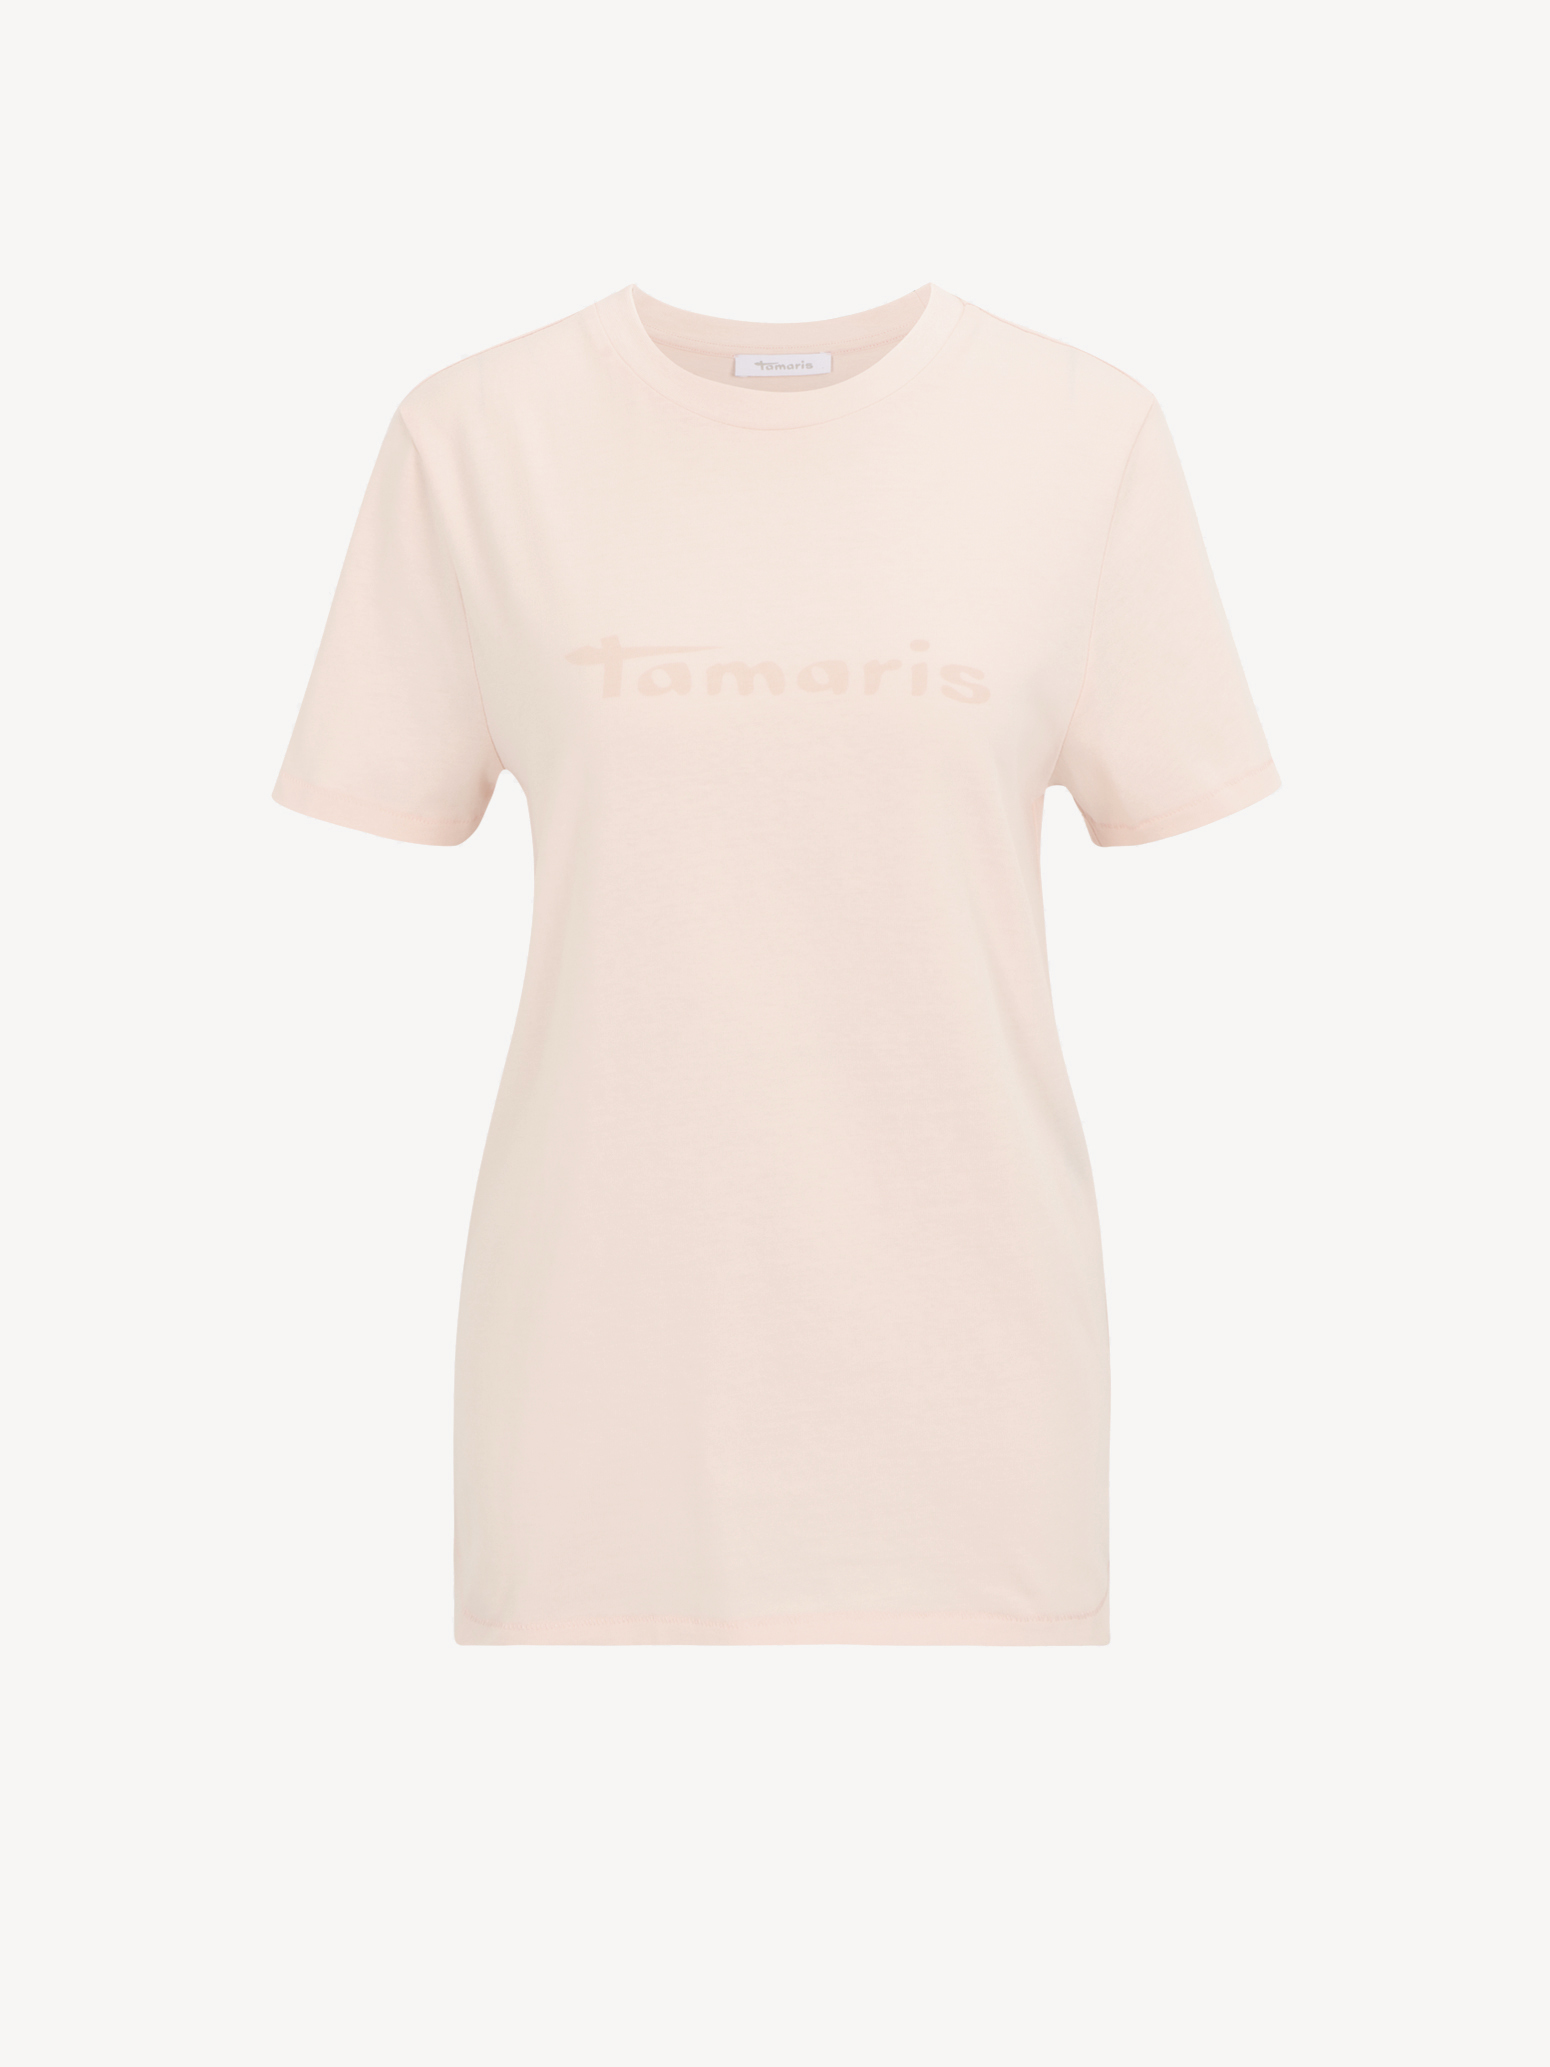 T-Shirt - rosa TAW0121-40060: Tamaris T-Shirts online kaufen!